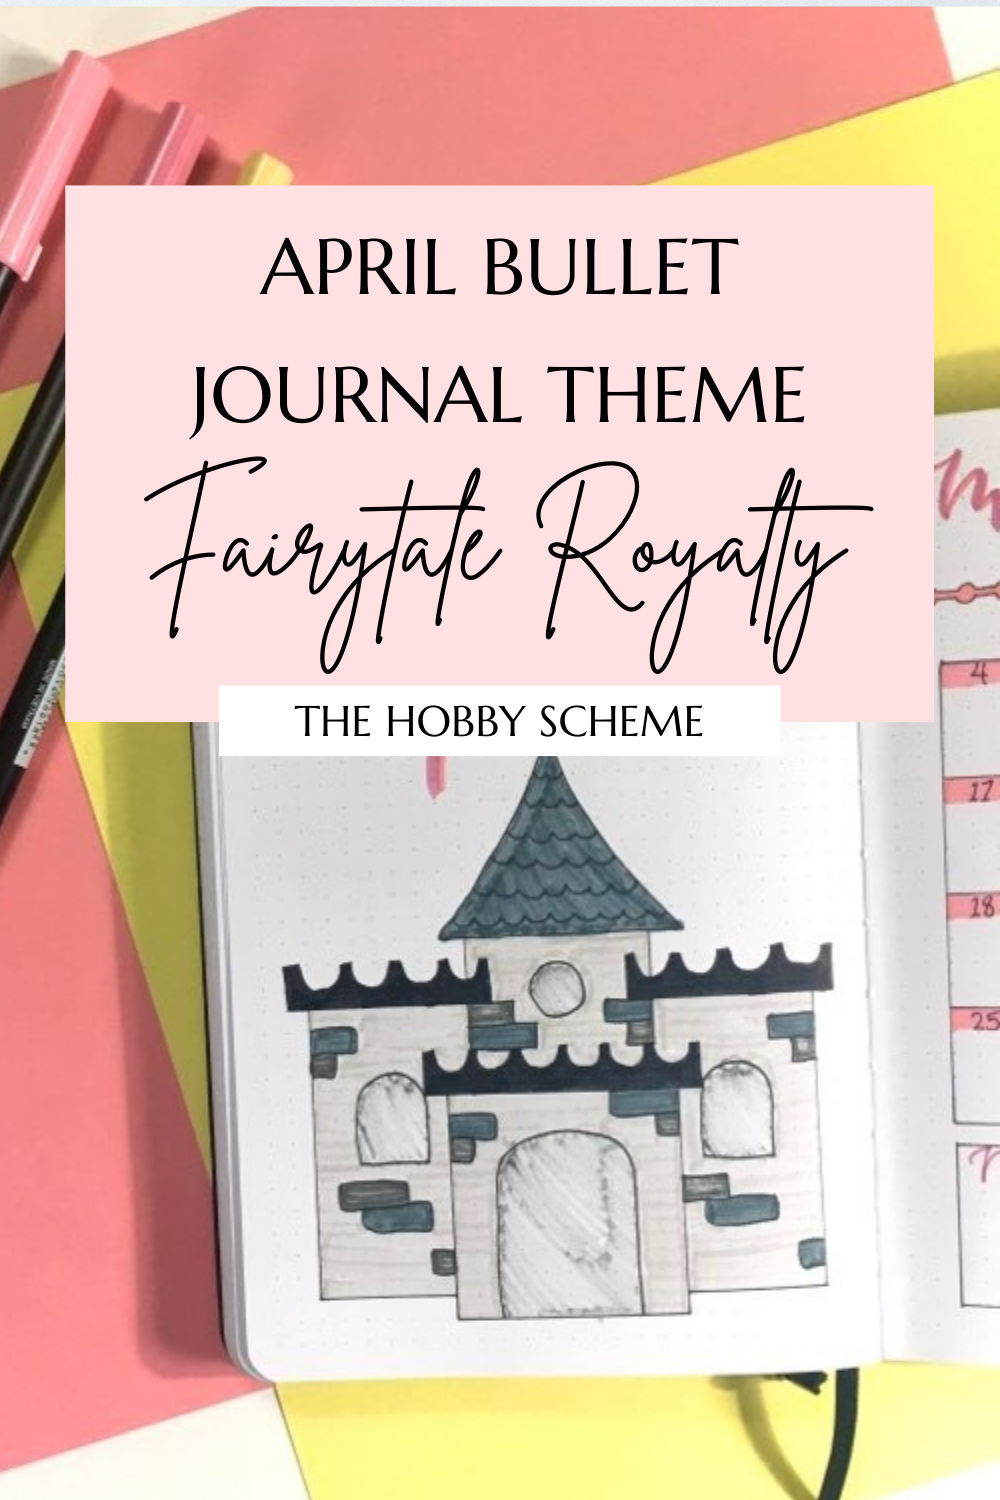 April bullet journal theme royalty